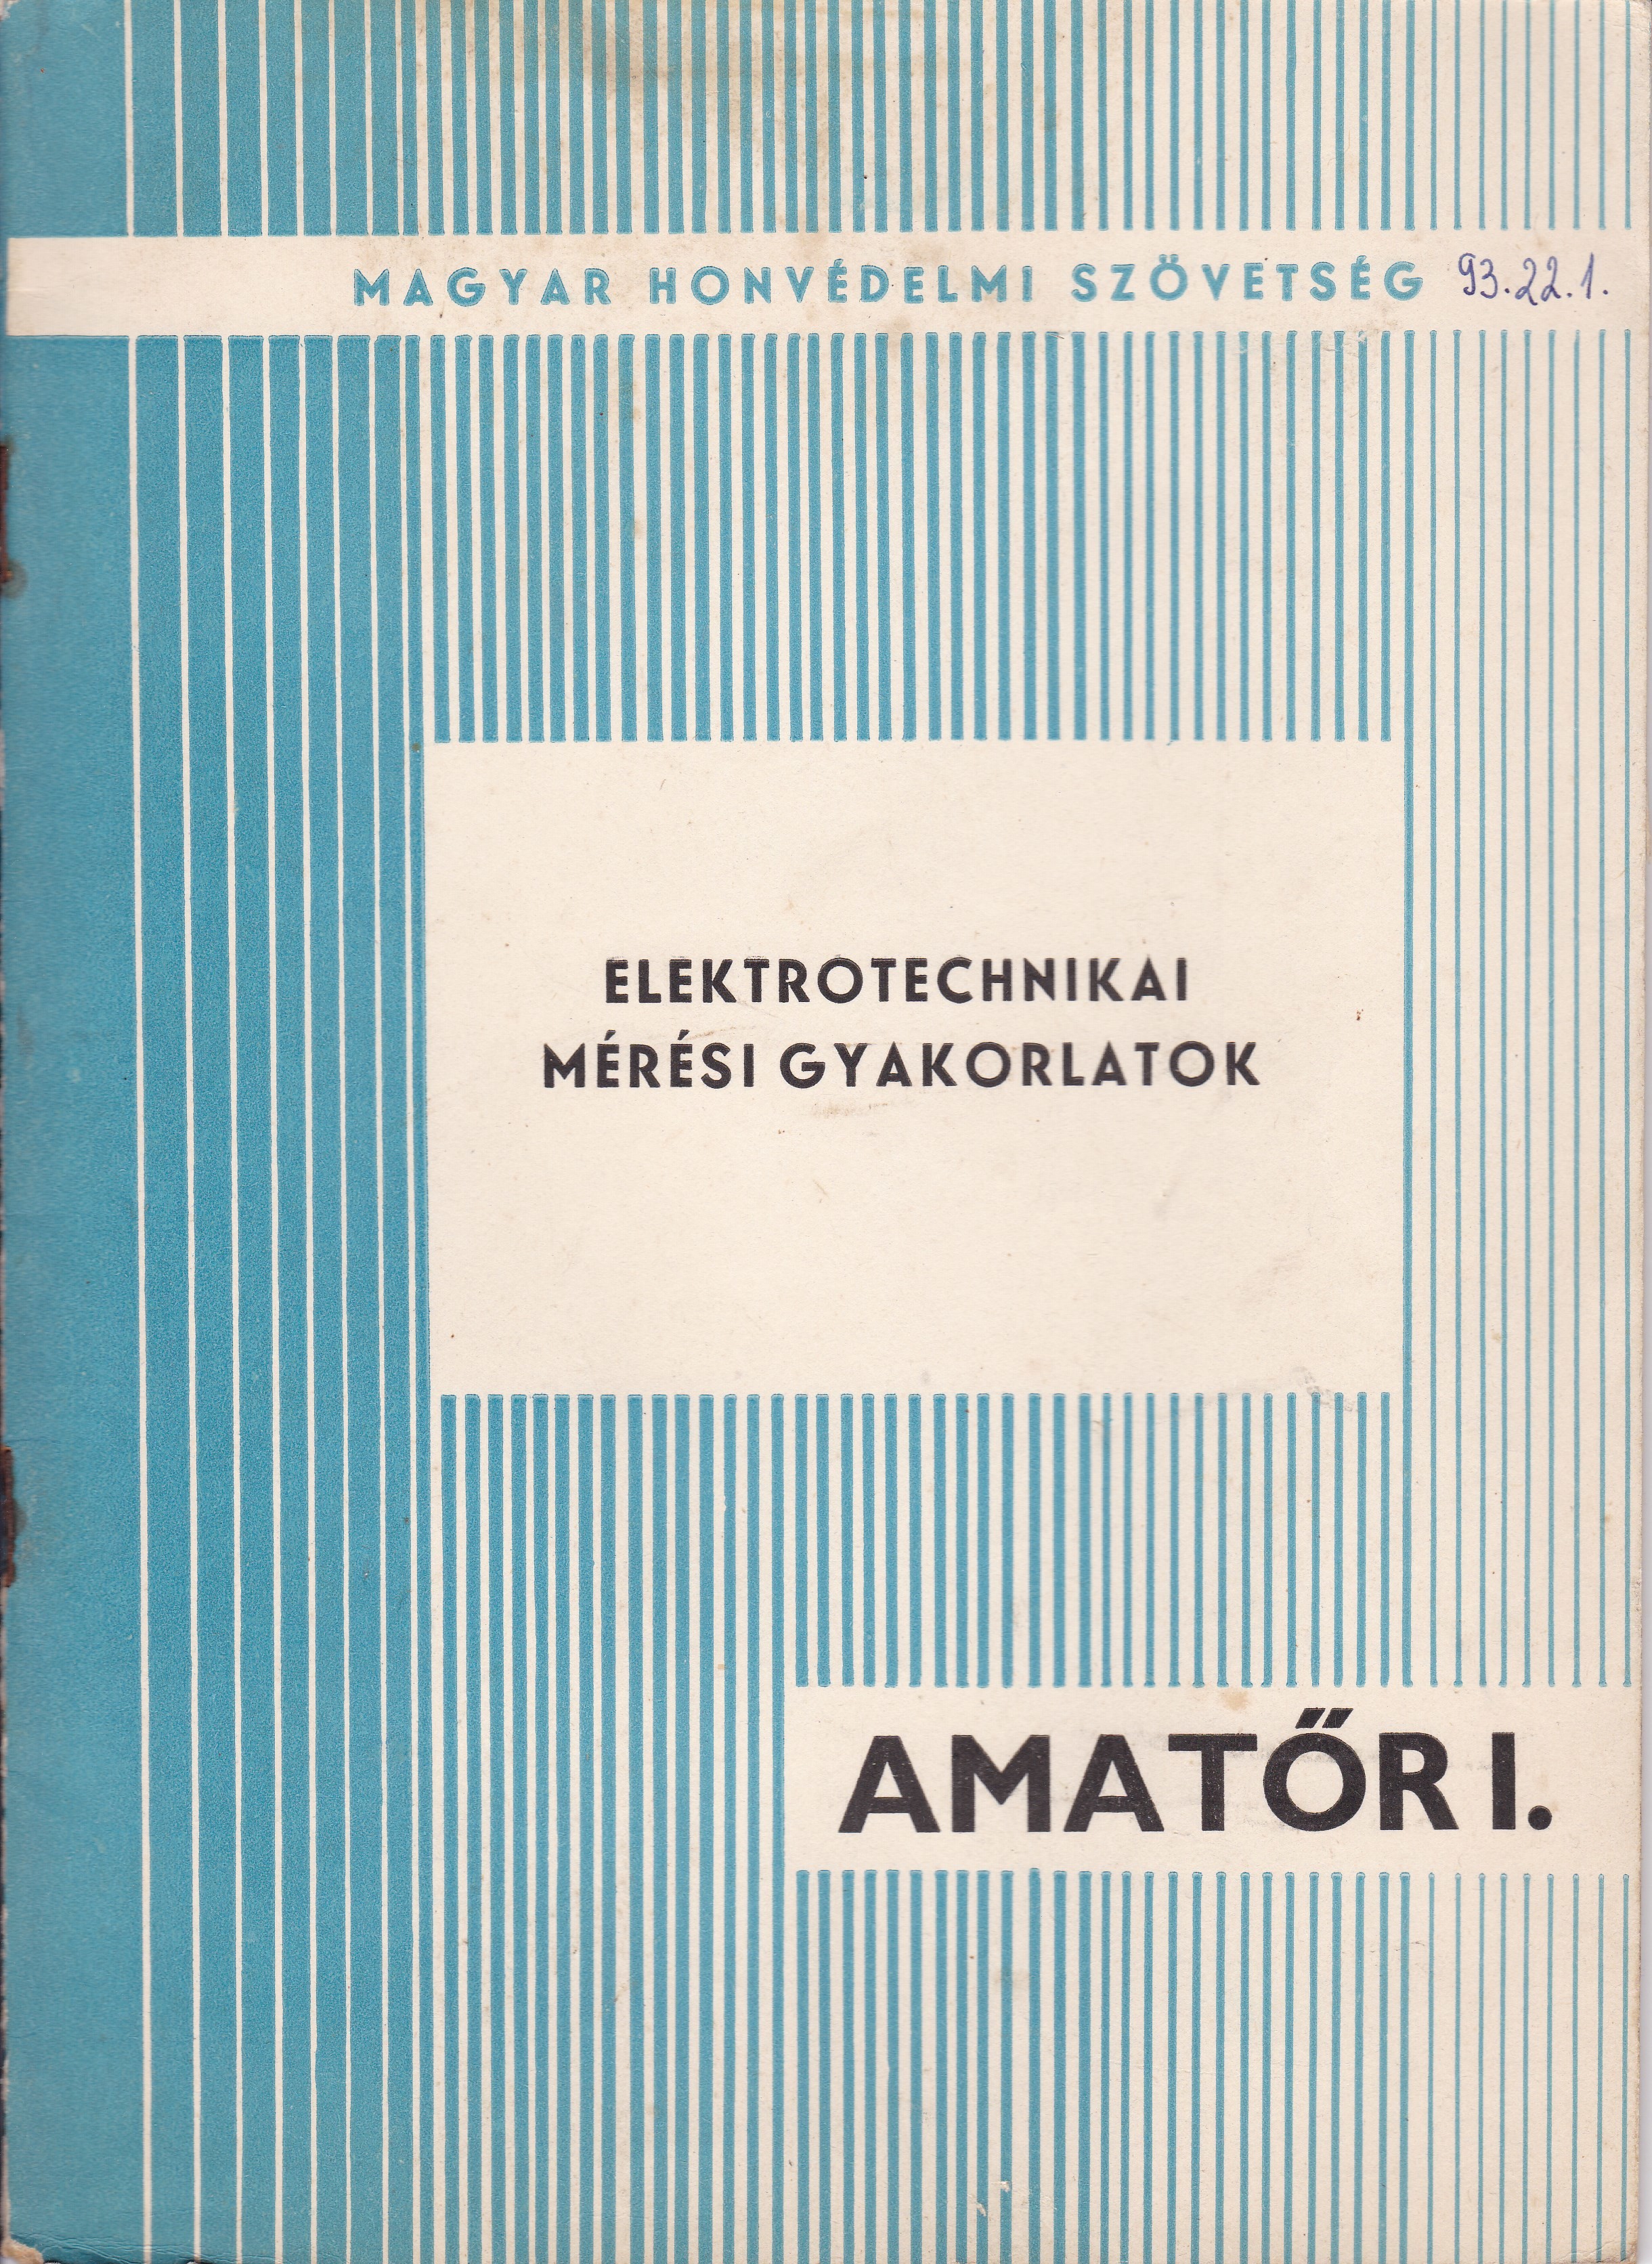 Elektrotechnikai mérési gyakorlatok (Tapolcai Városi Múzeum CC BY-NC-SA)